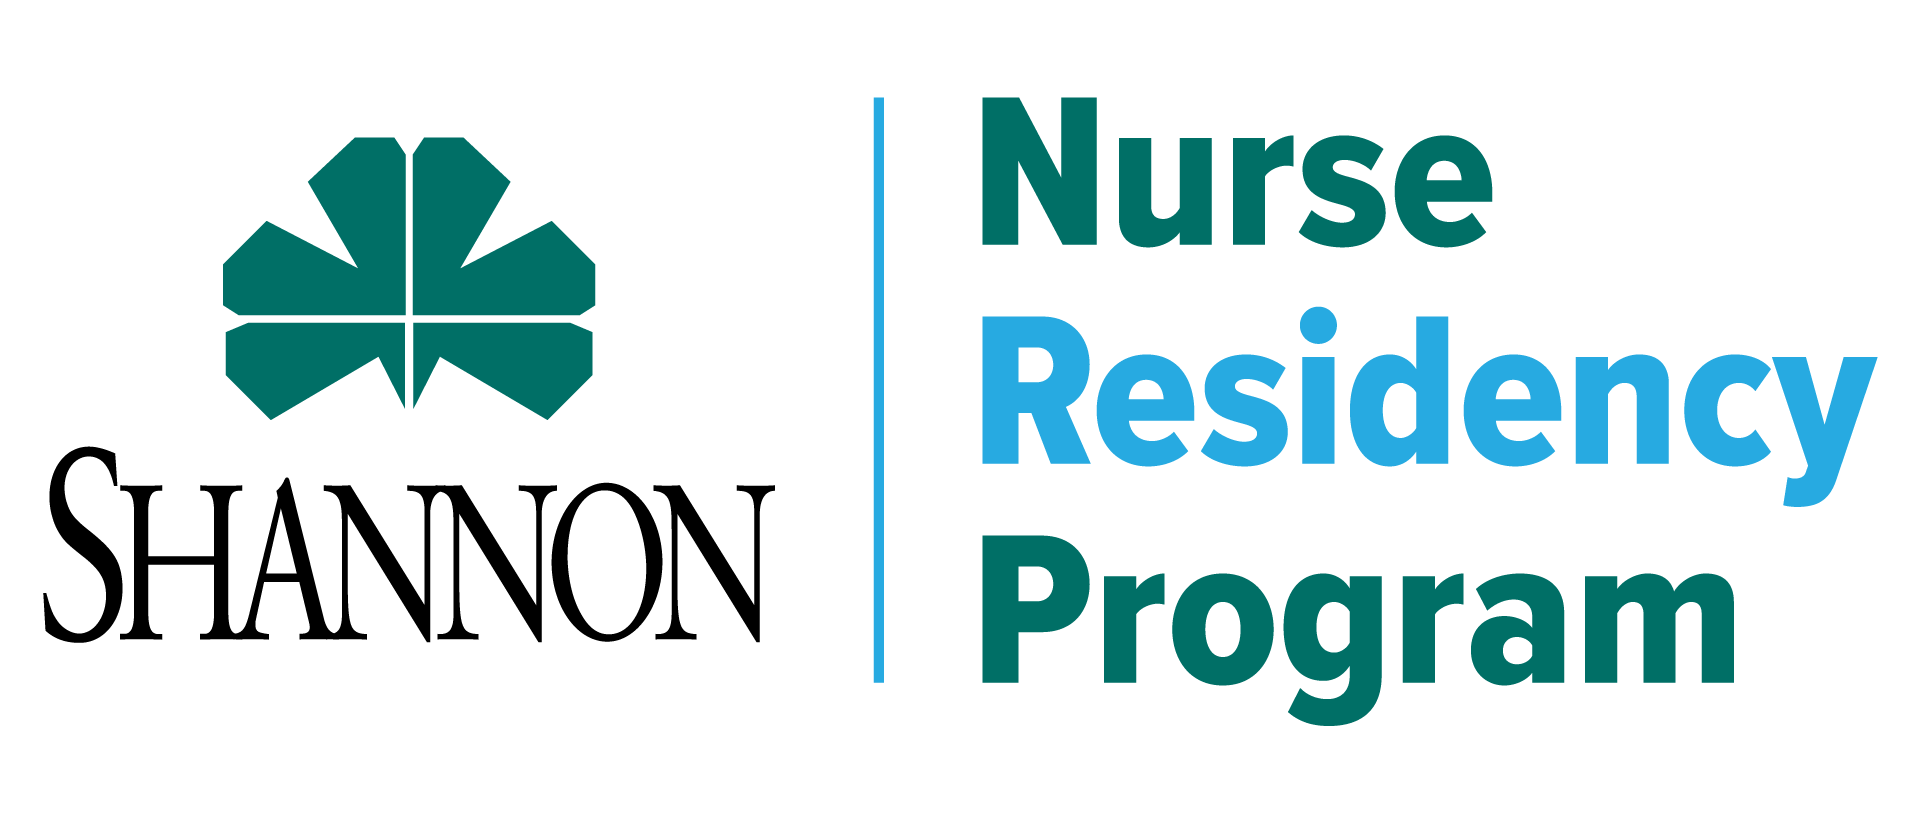 nurse residency program logo